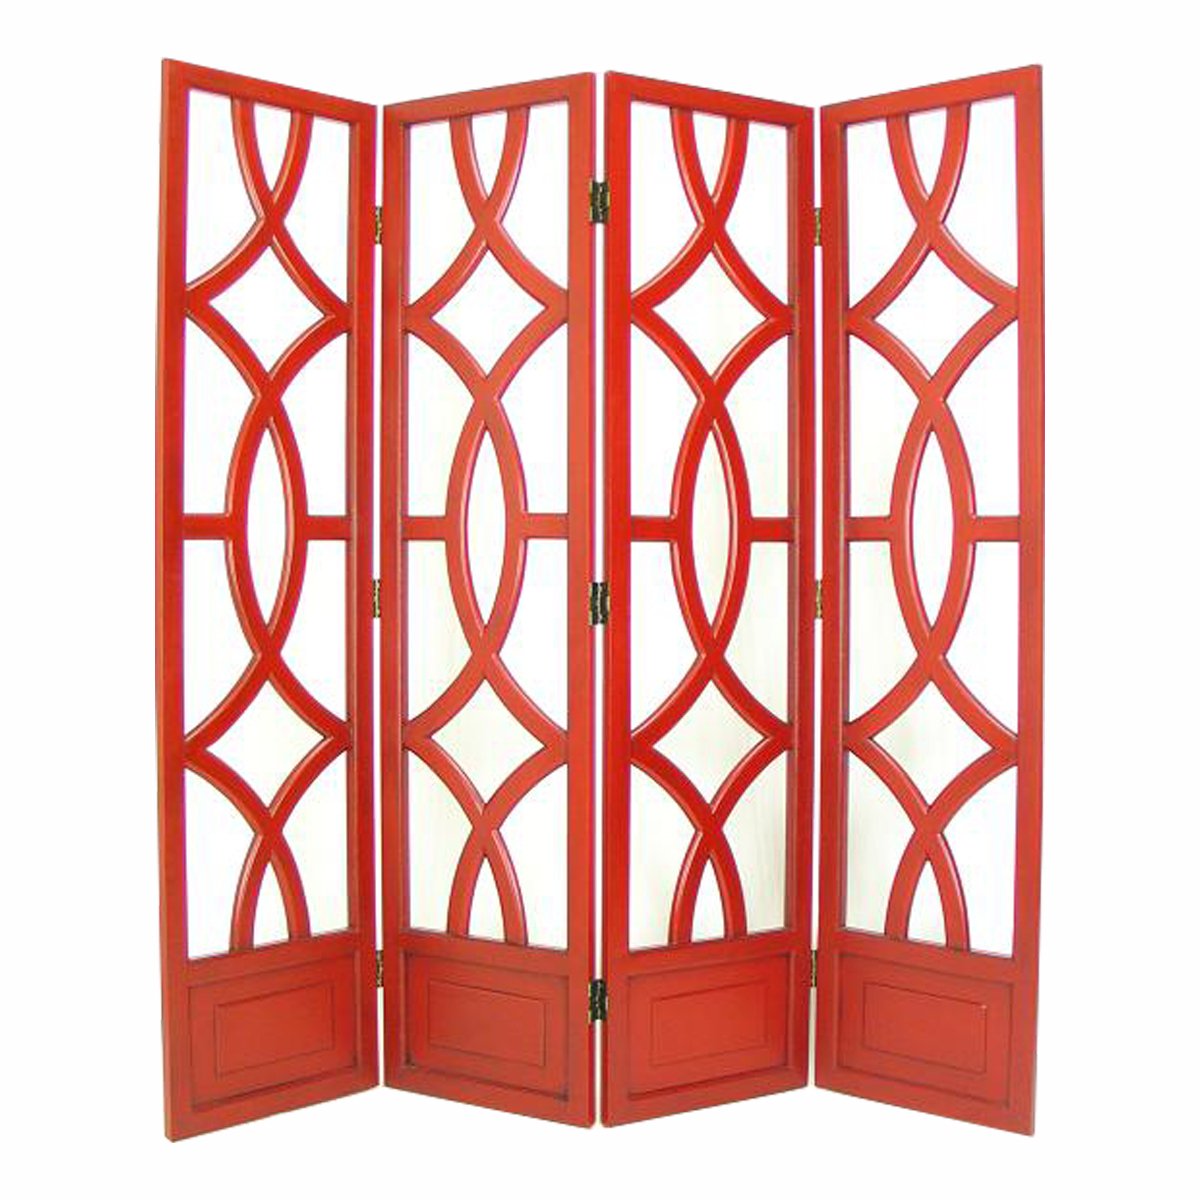 Wooden 4 Panel Room Divider With Open Geometric Design, Red- Saltoro Sherpi